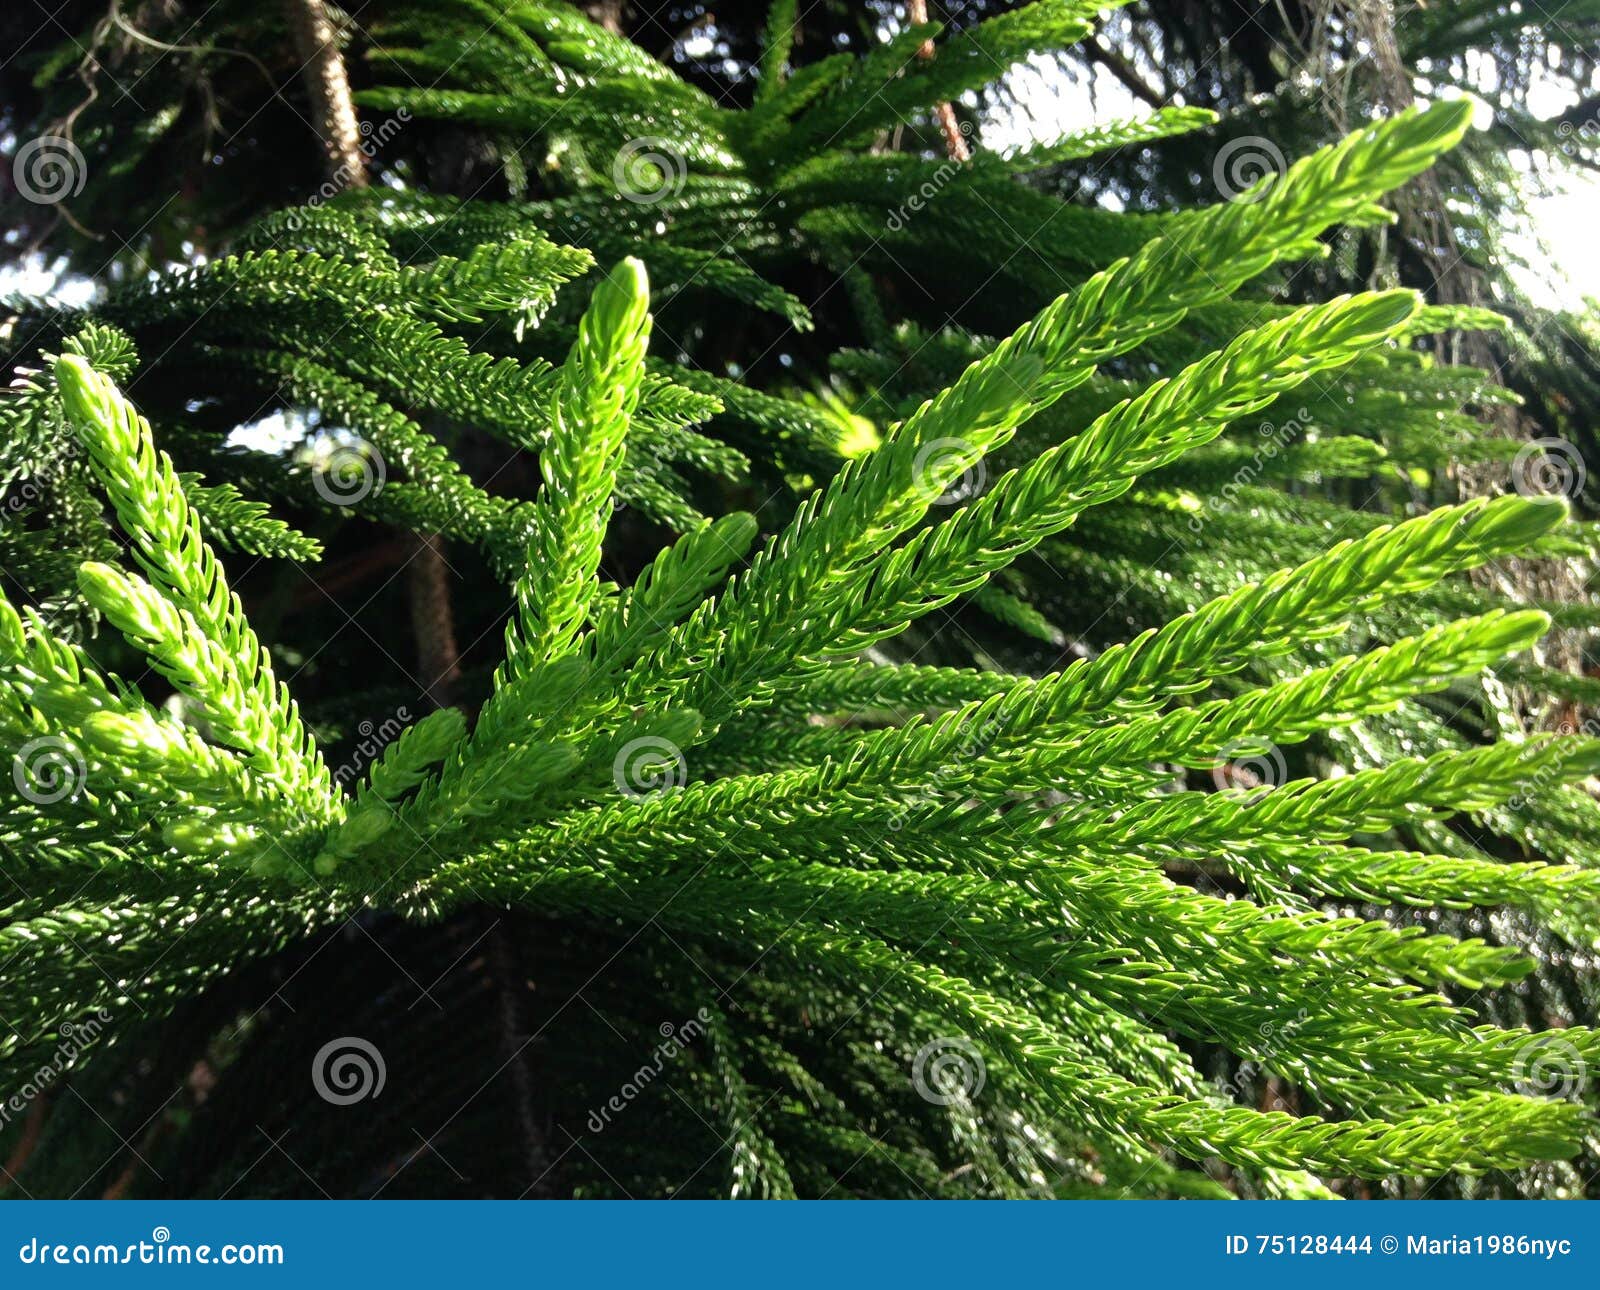 Araucaria Heterophylla Norfolk Island Pine Star Pine Triangle Tree Or Living Christmas Tree Growing In Florida Stock Photo Image Of Florida Branch